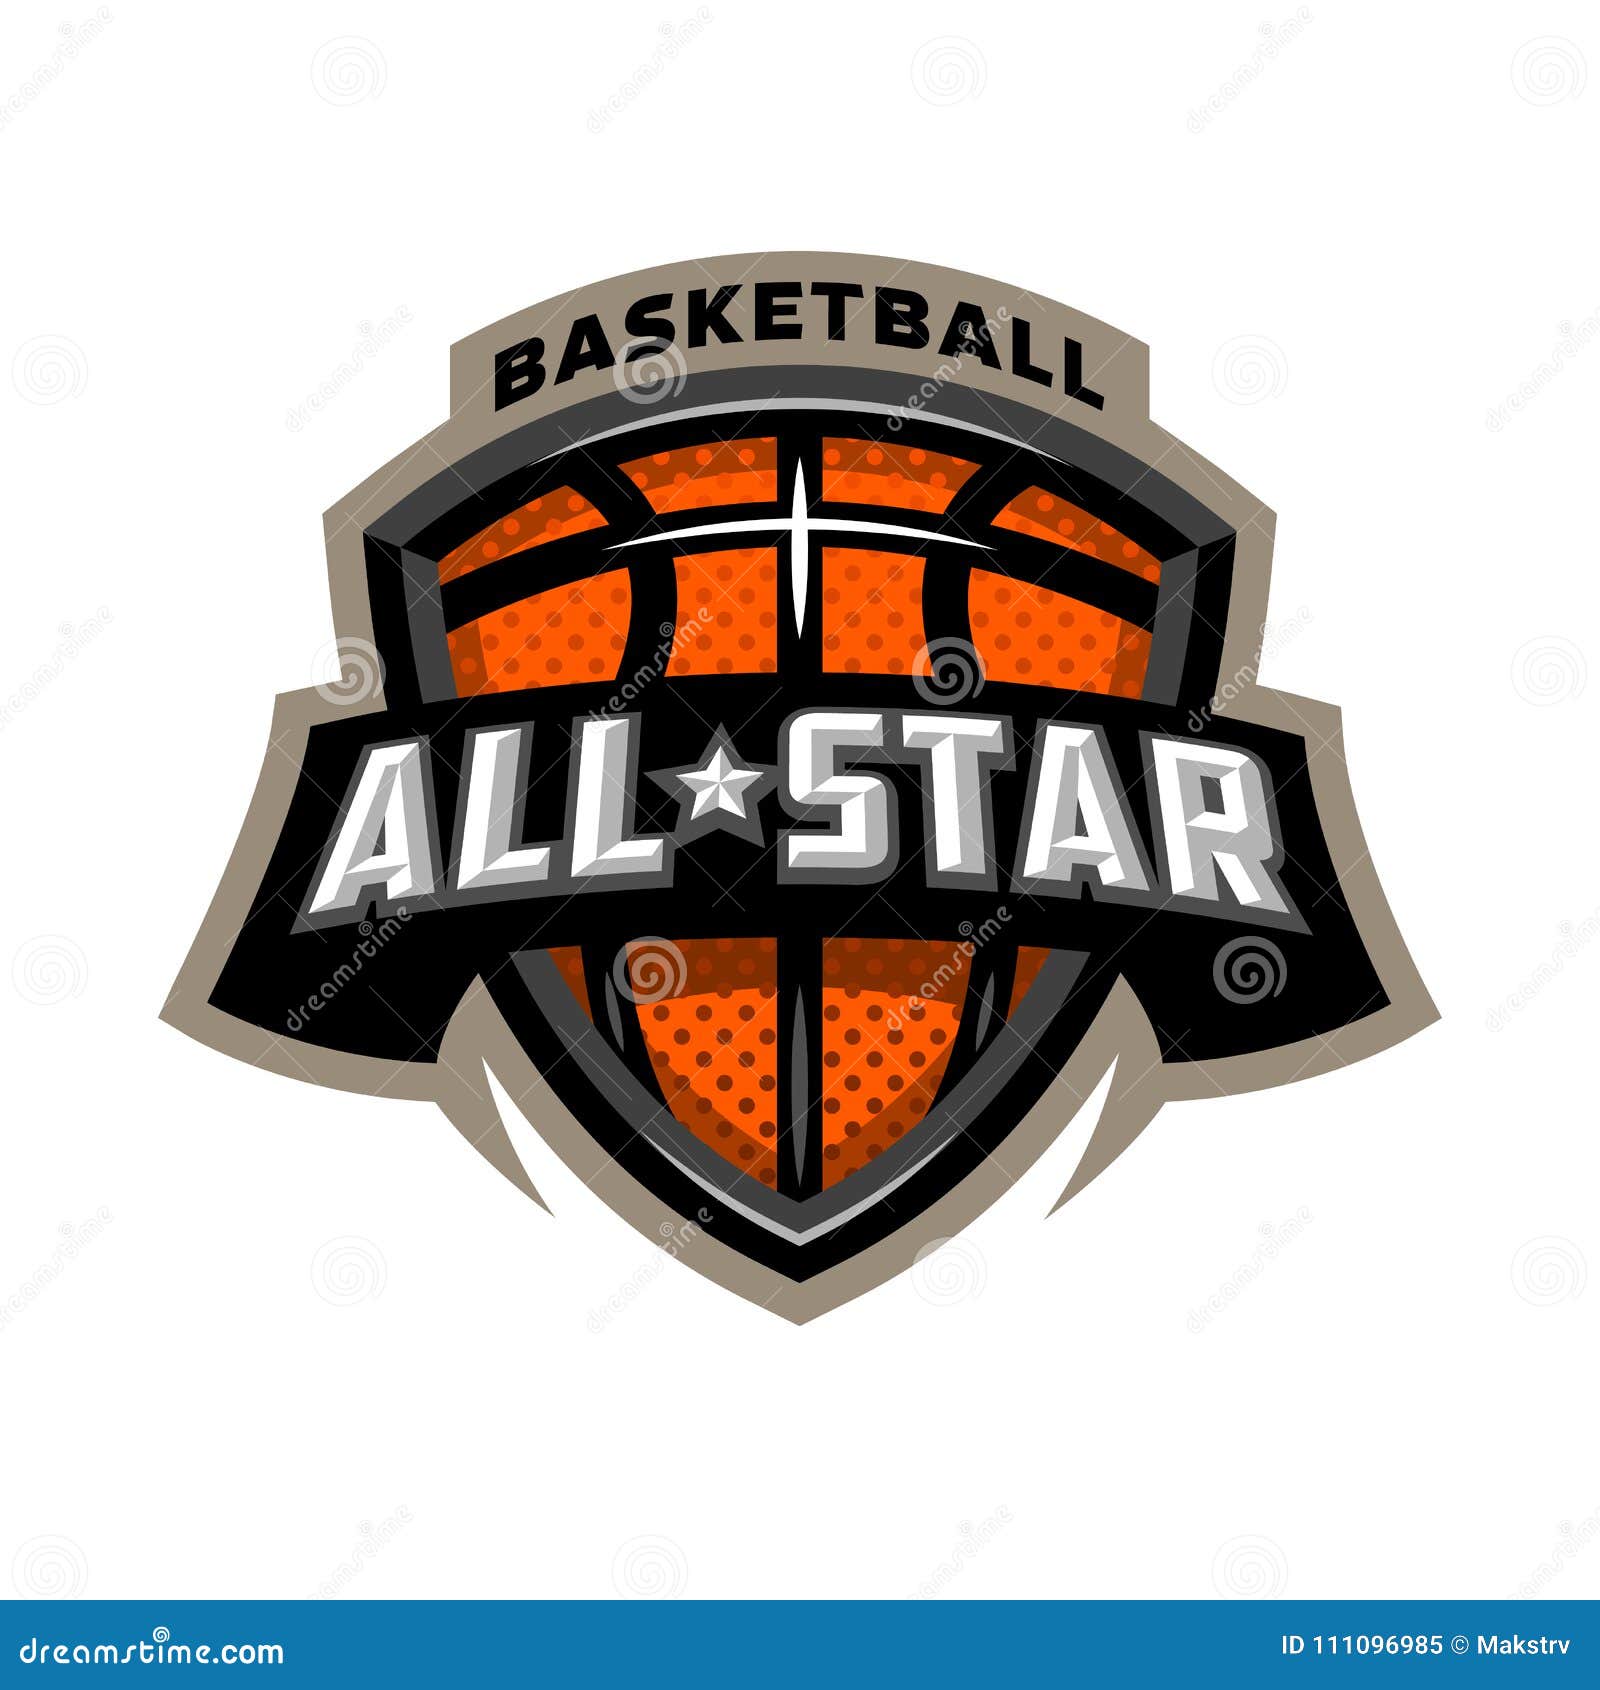 all star basketball, sports logo emblem.